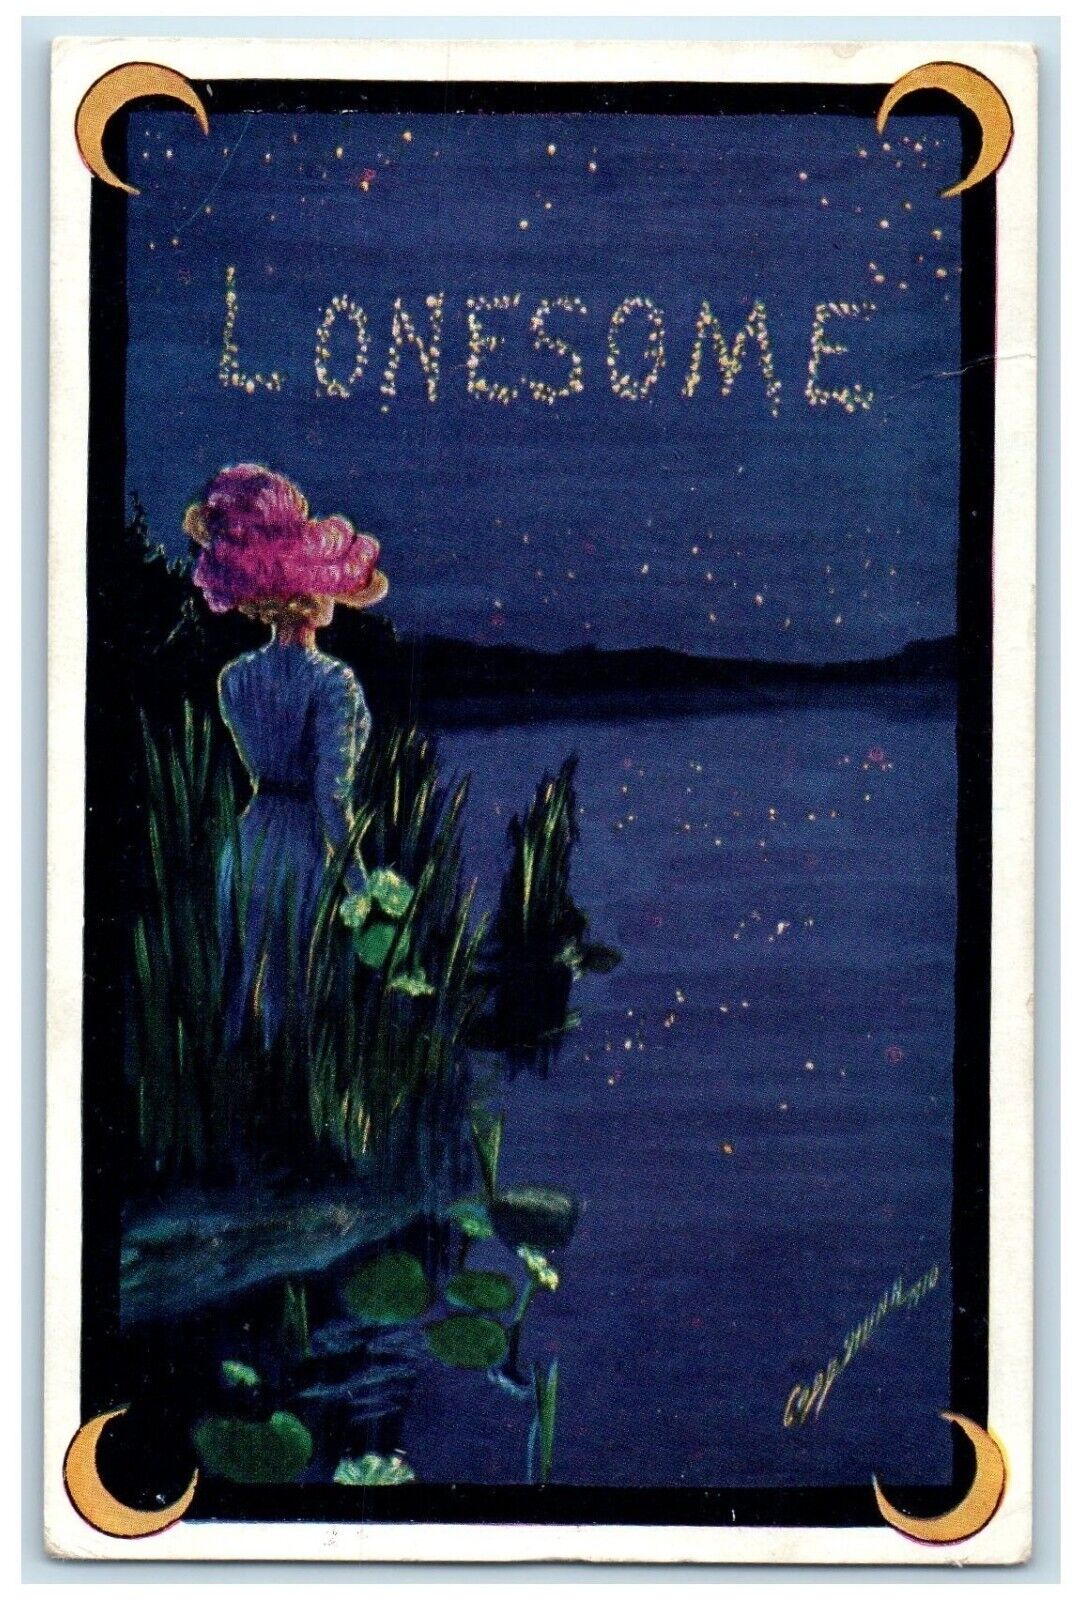 1911 Woman Sea Scene Lonesome Gayford Minnesota MN Posted Antique Postcard